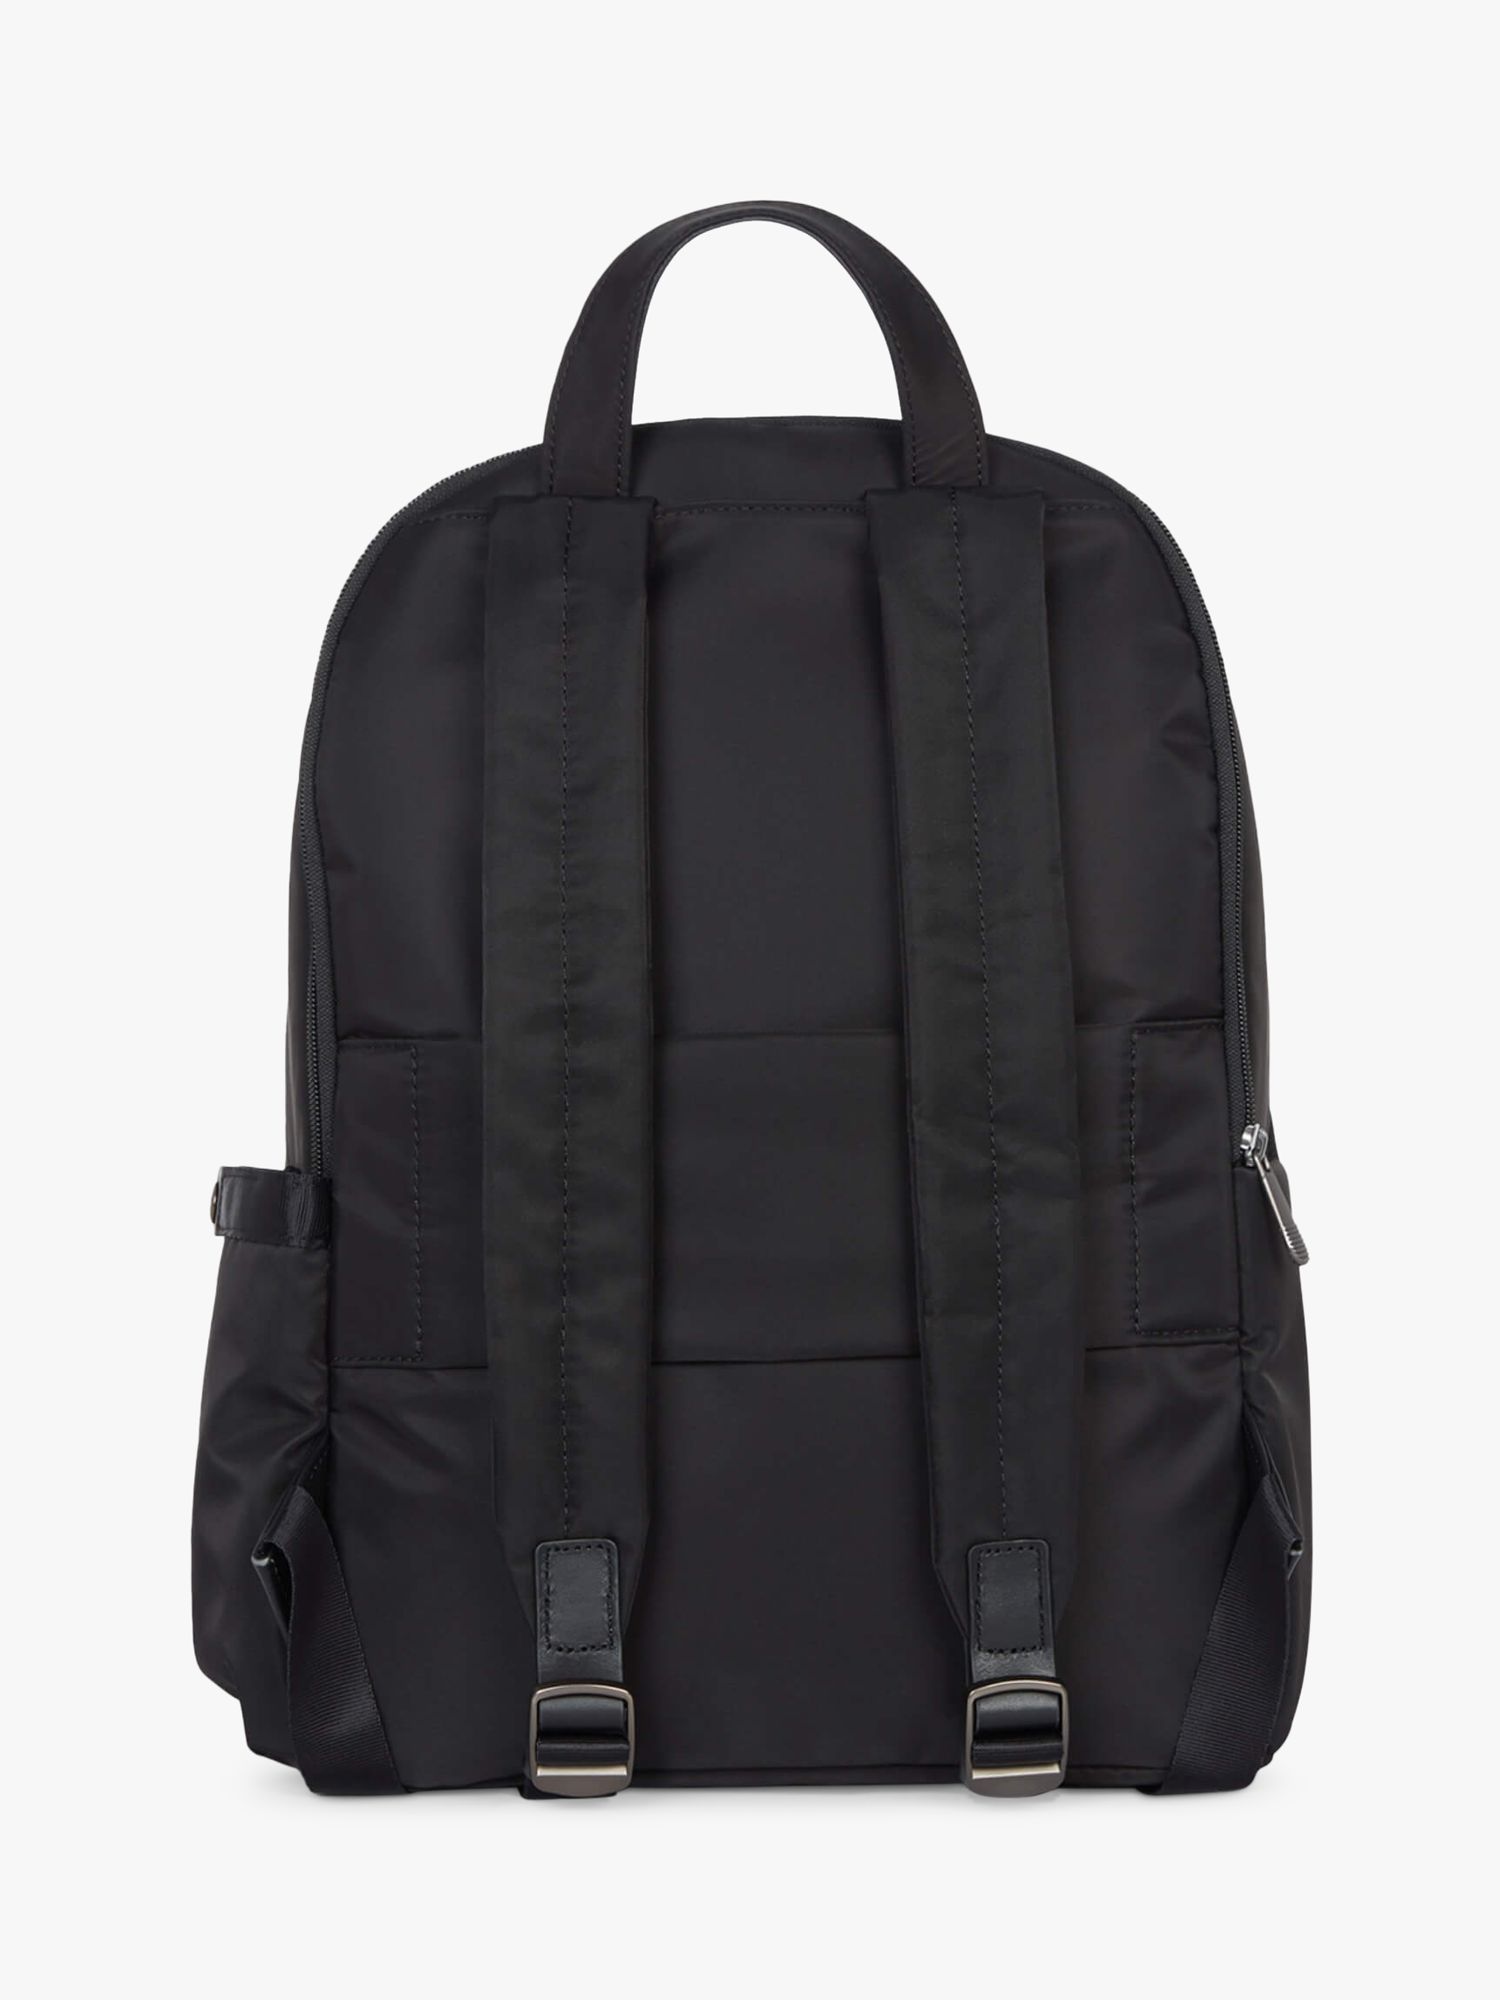 Antler Chelsea Backpack, Black at John Lewis & Partners